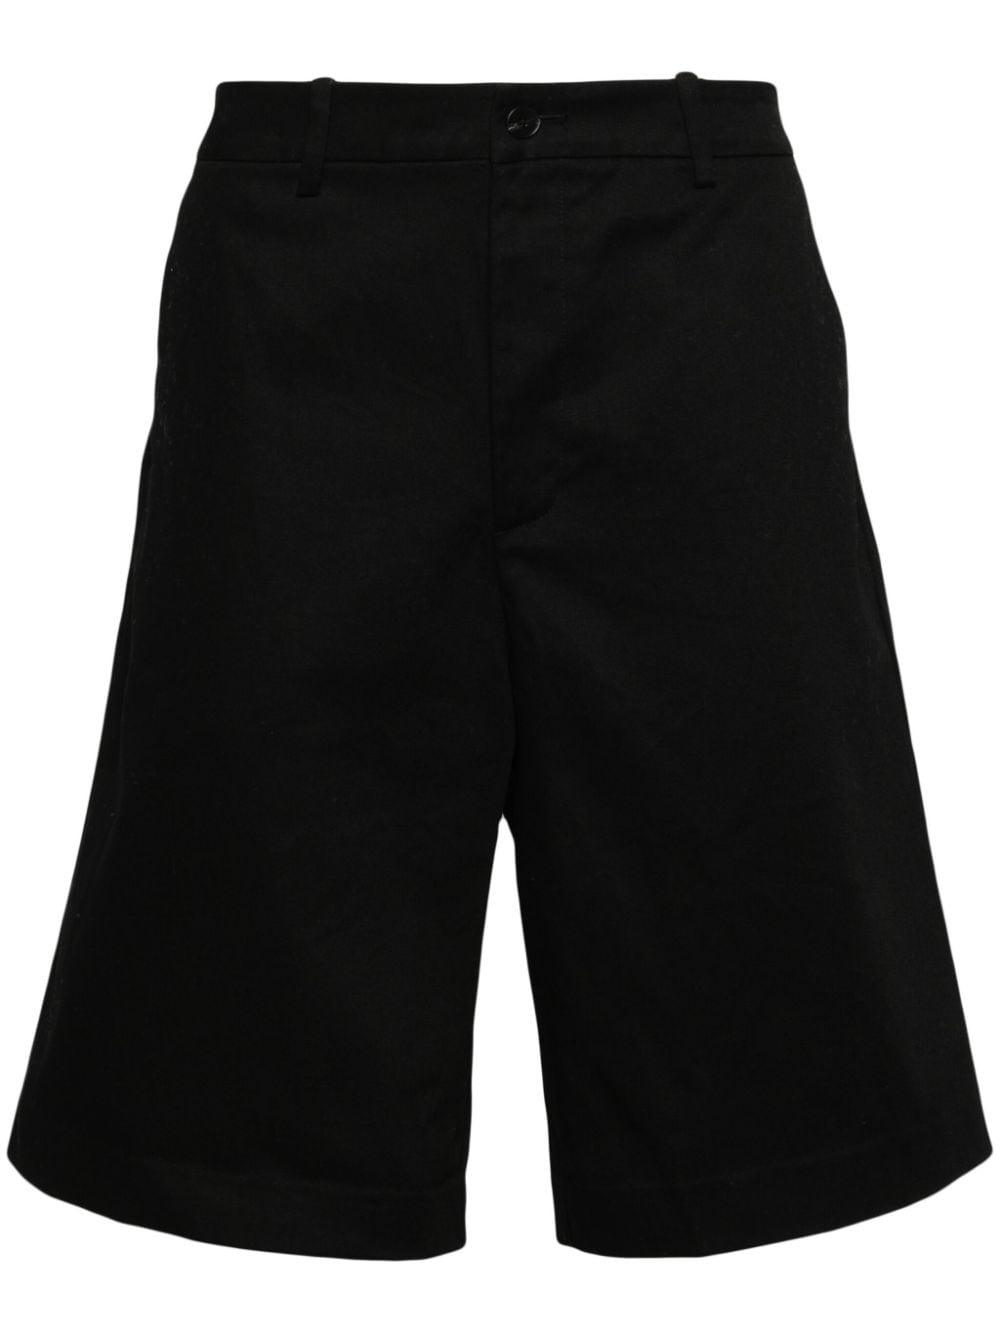 Axis cotton shorts - 1